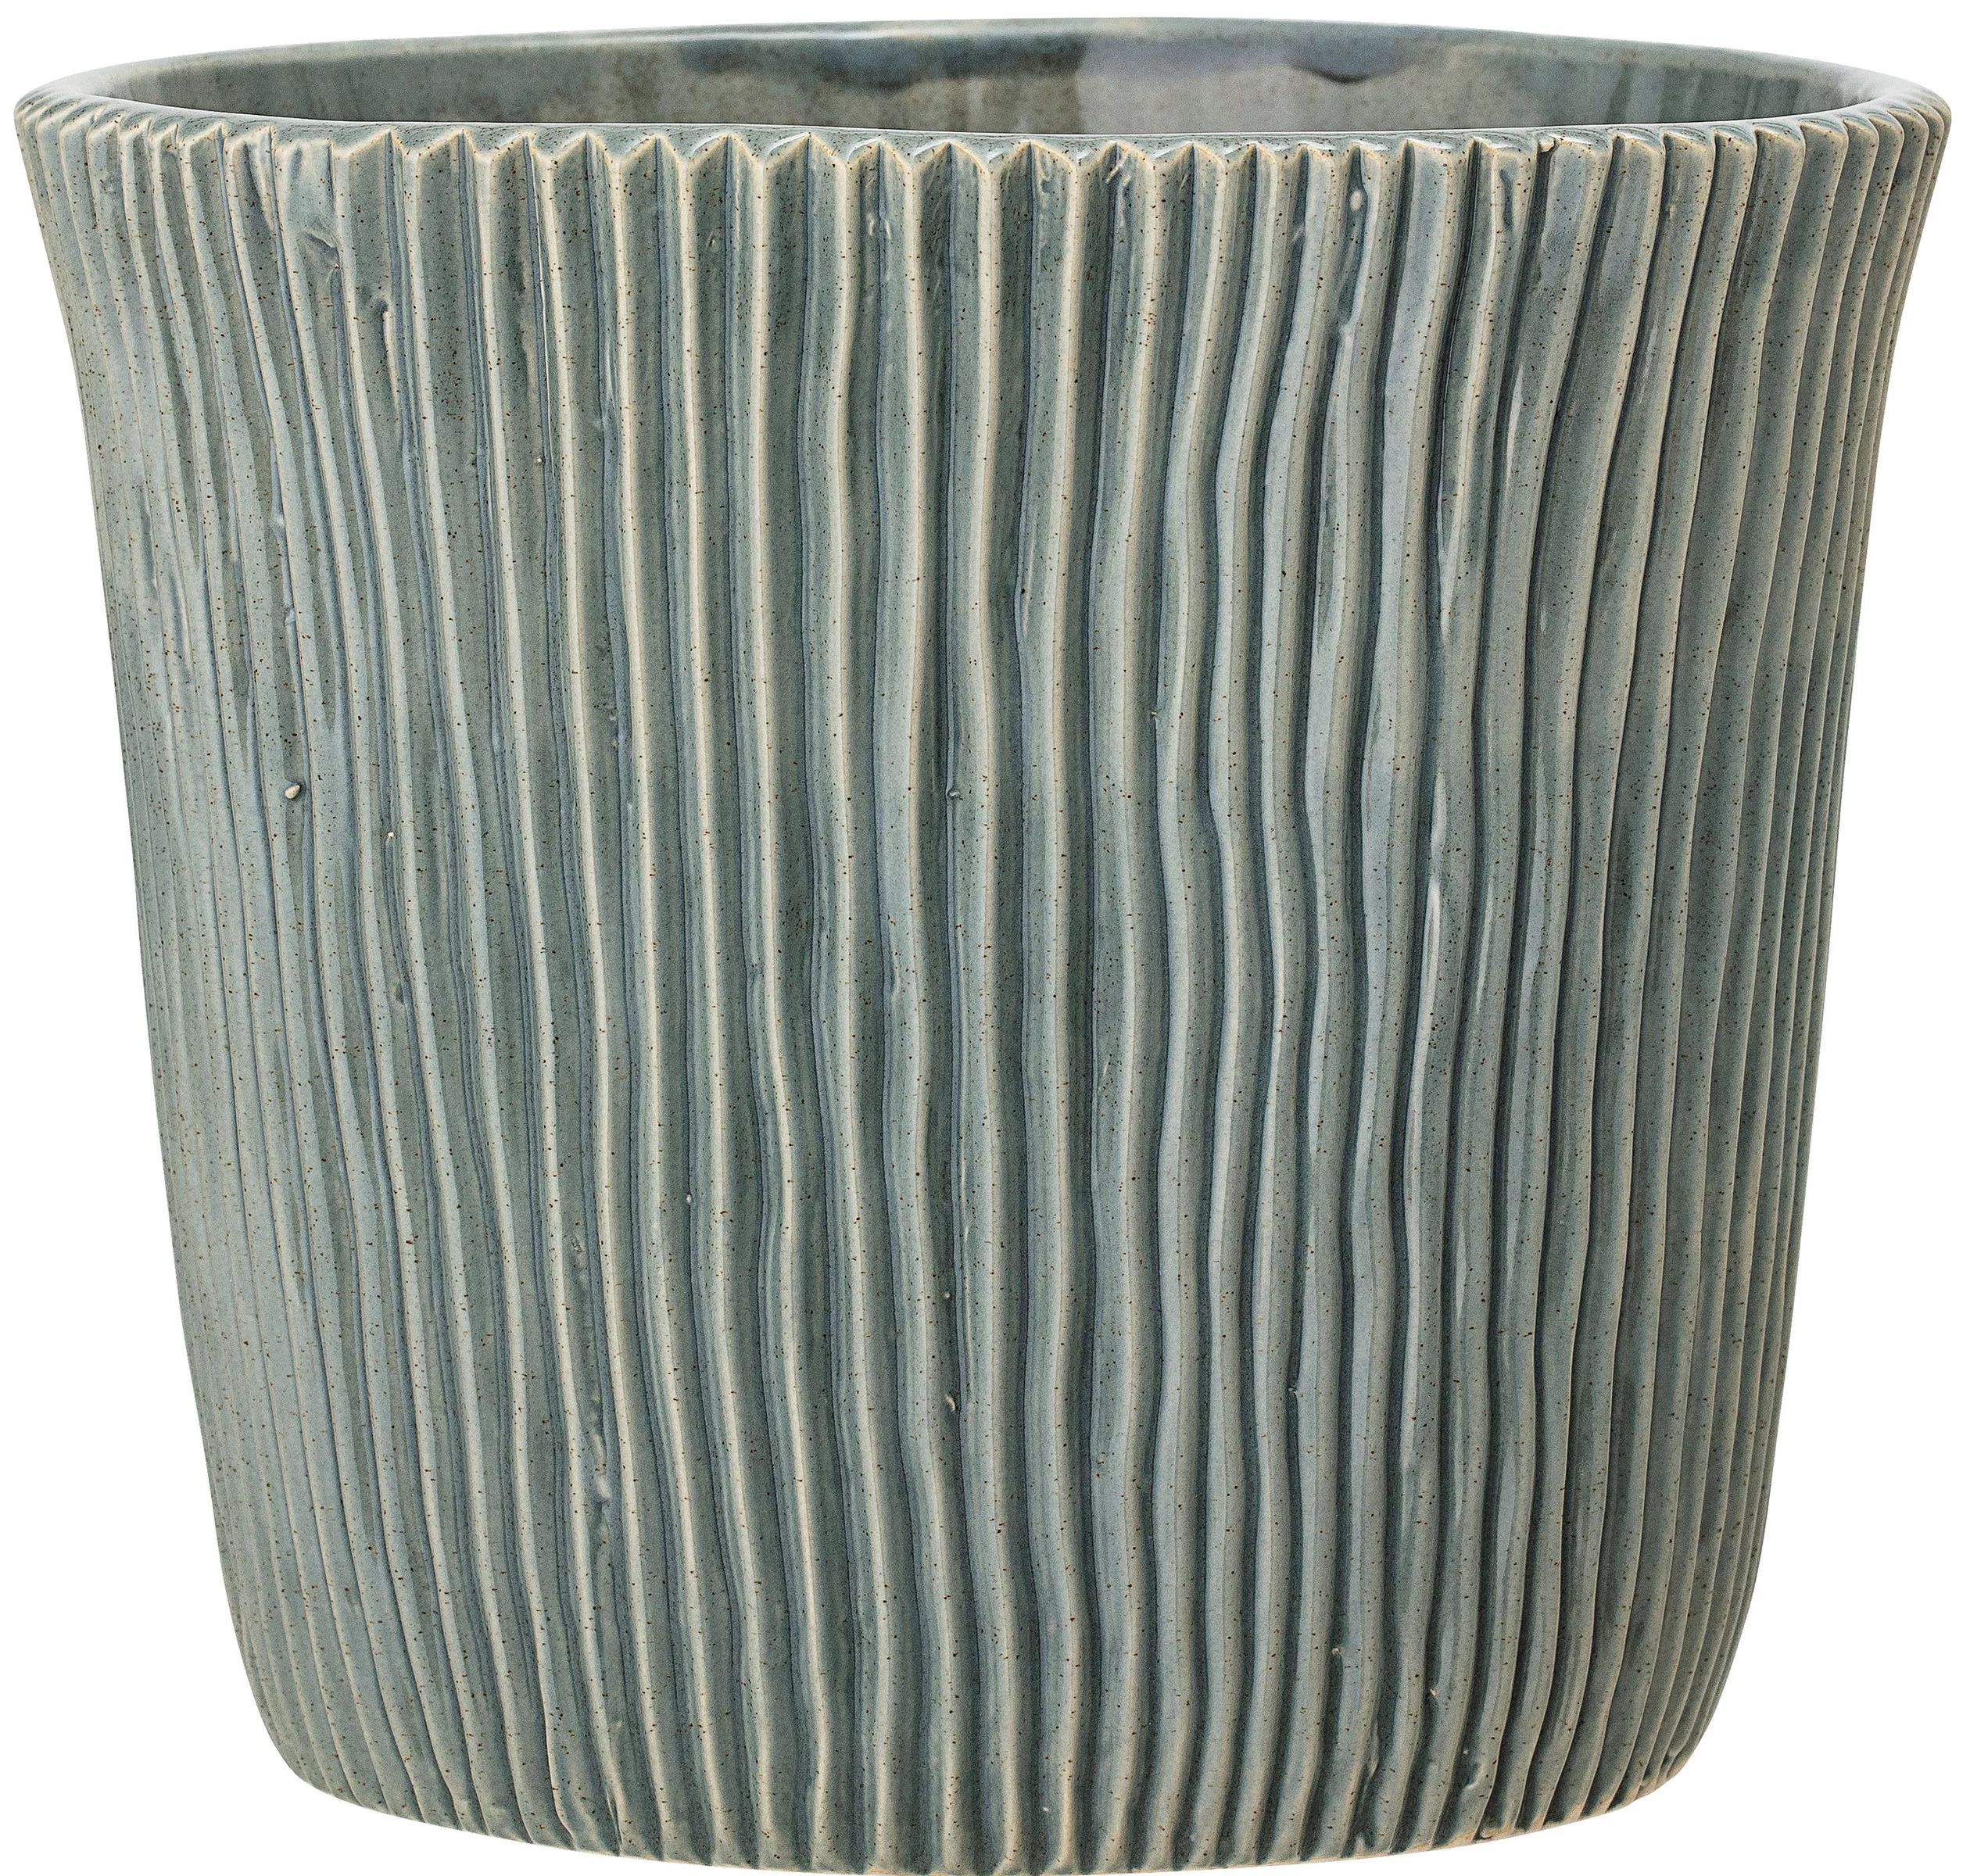 Warbler Ceramic Outdoor Pot Planter | Wayfair North America